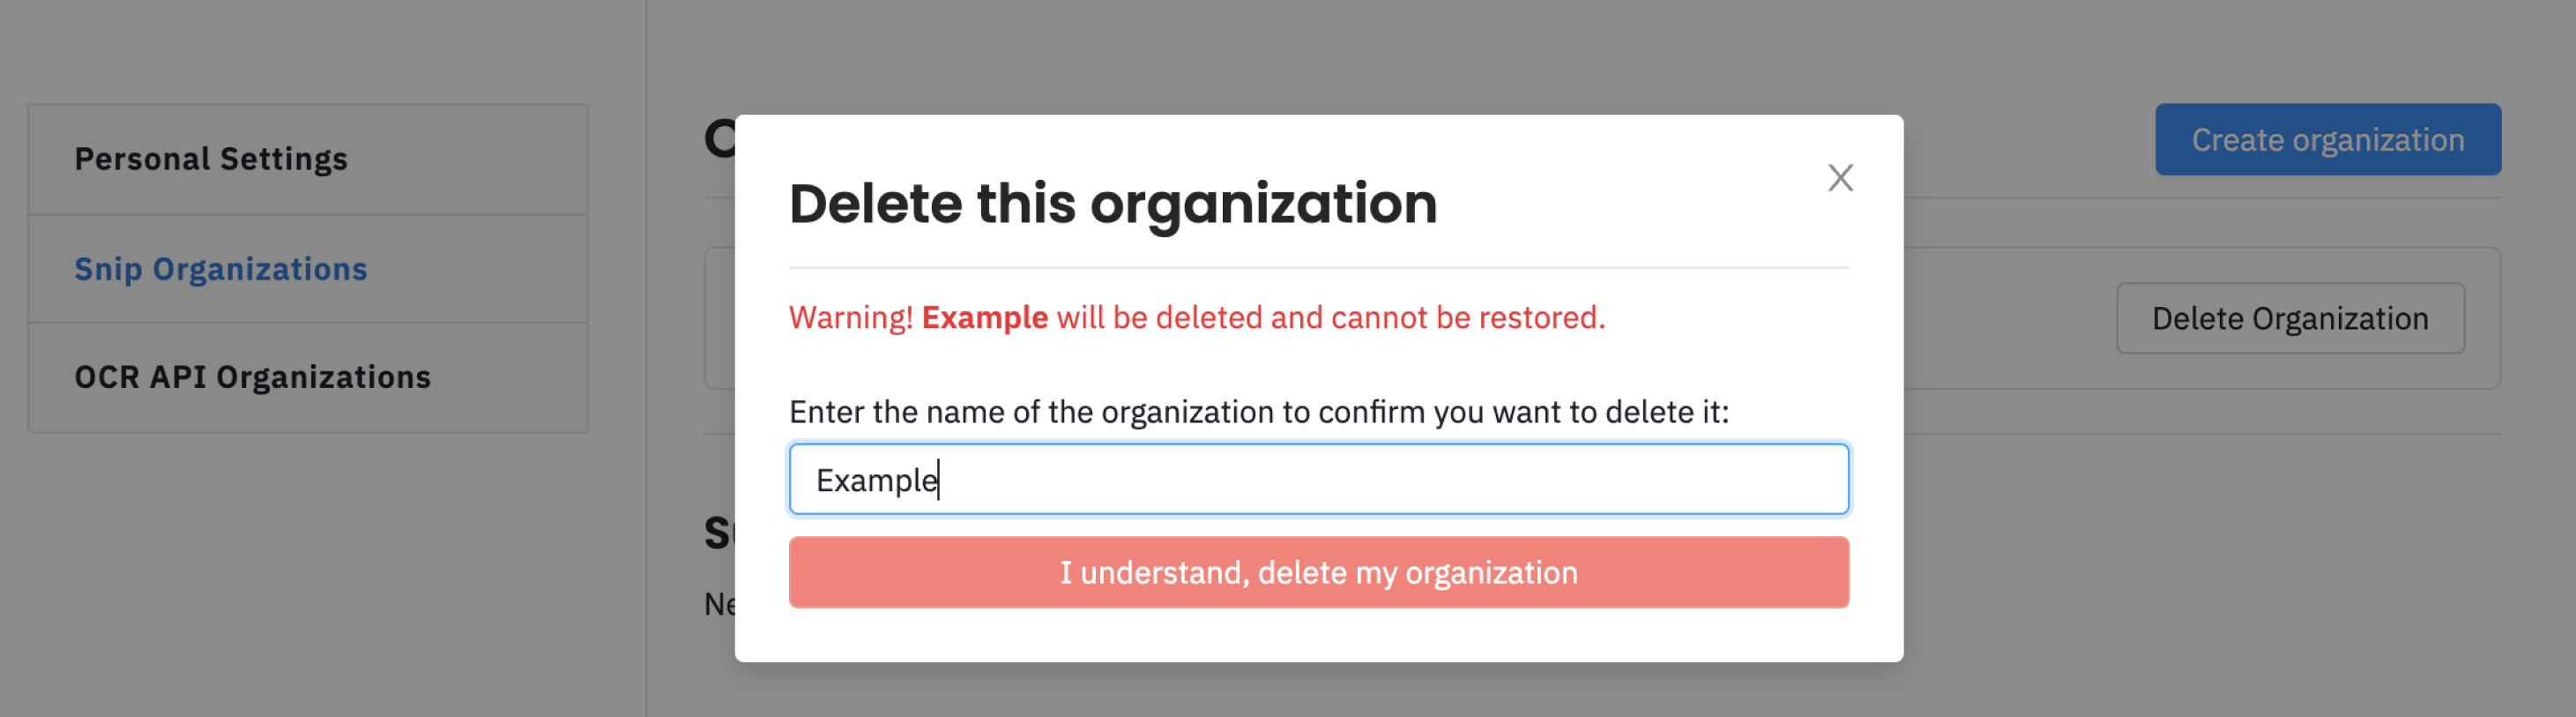 Delete organization modal filled